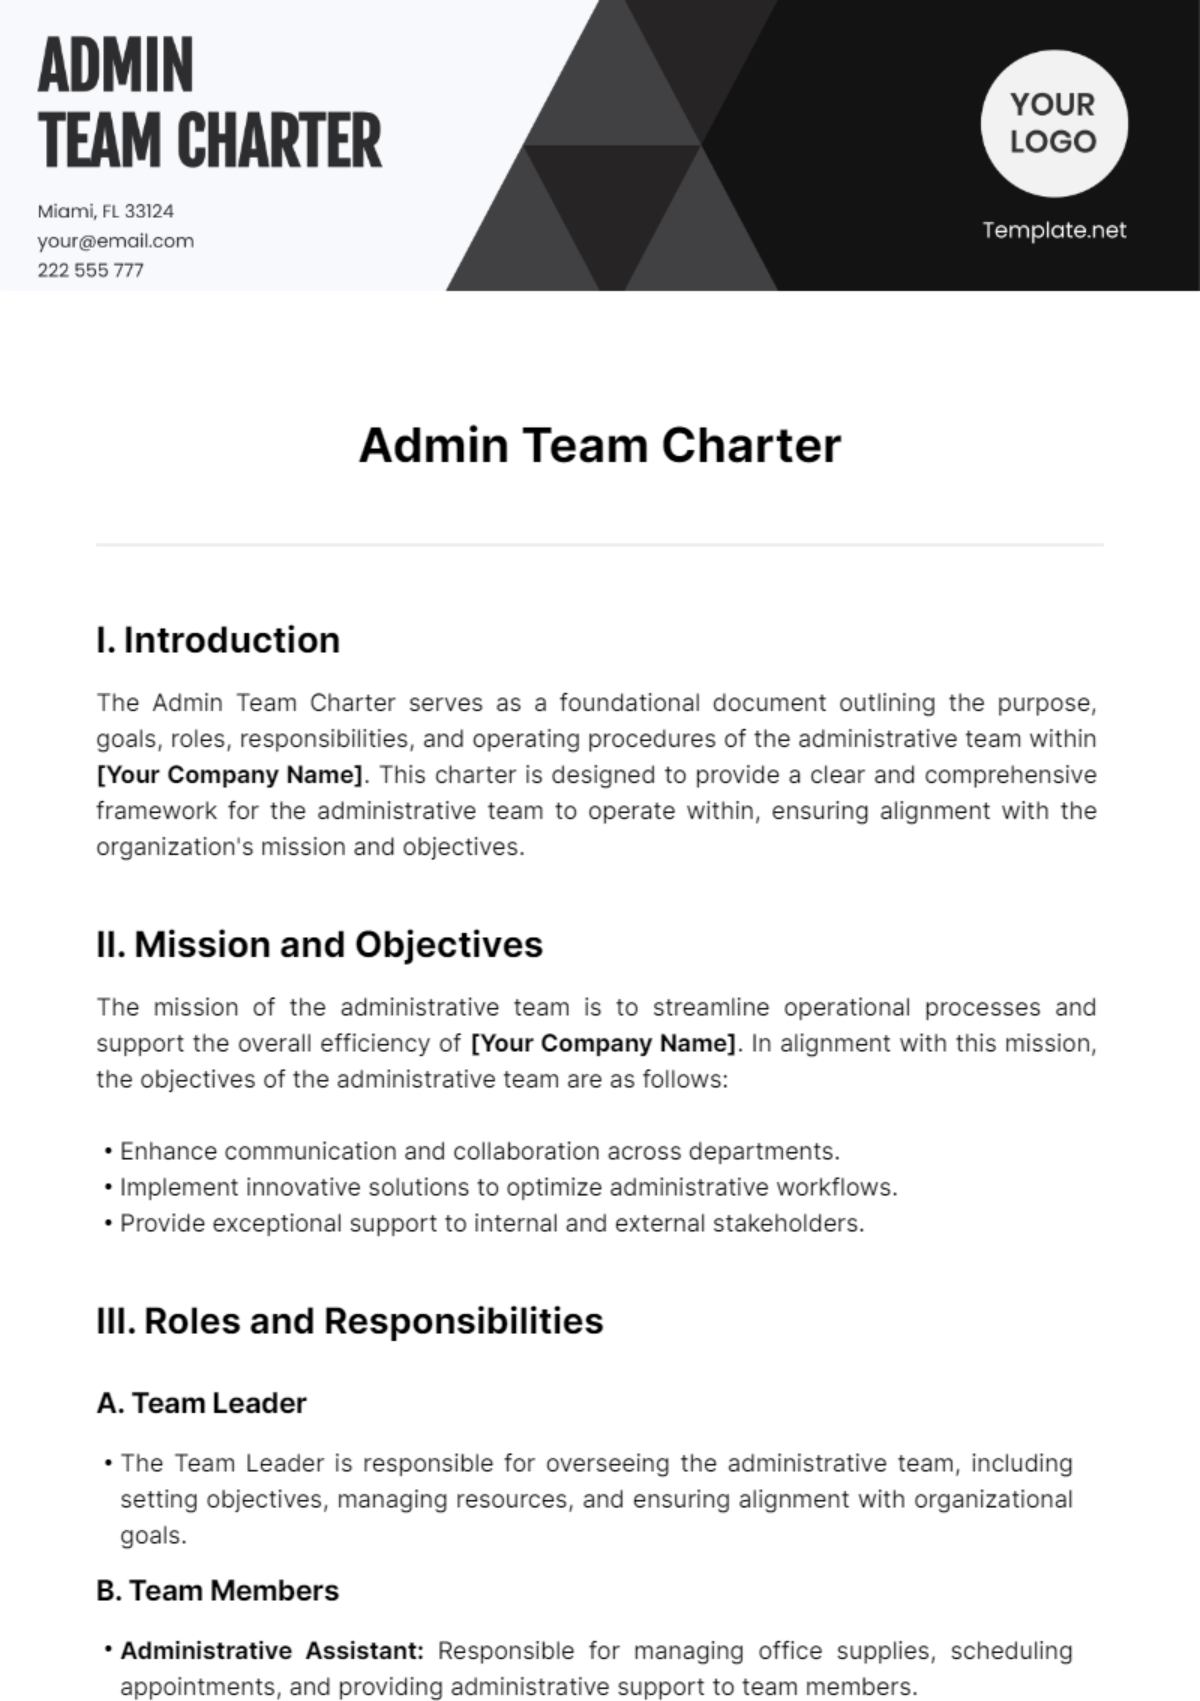 Free Admin Team Charter Template